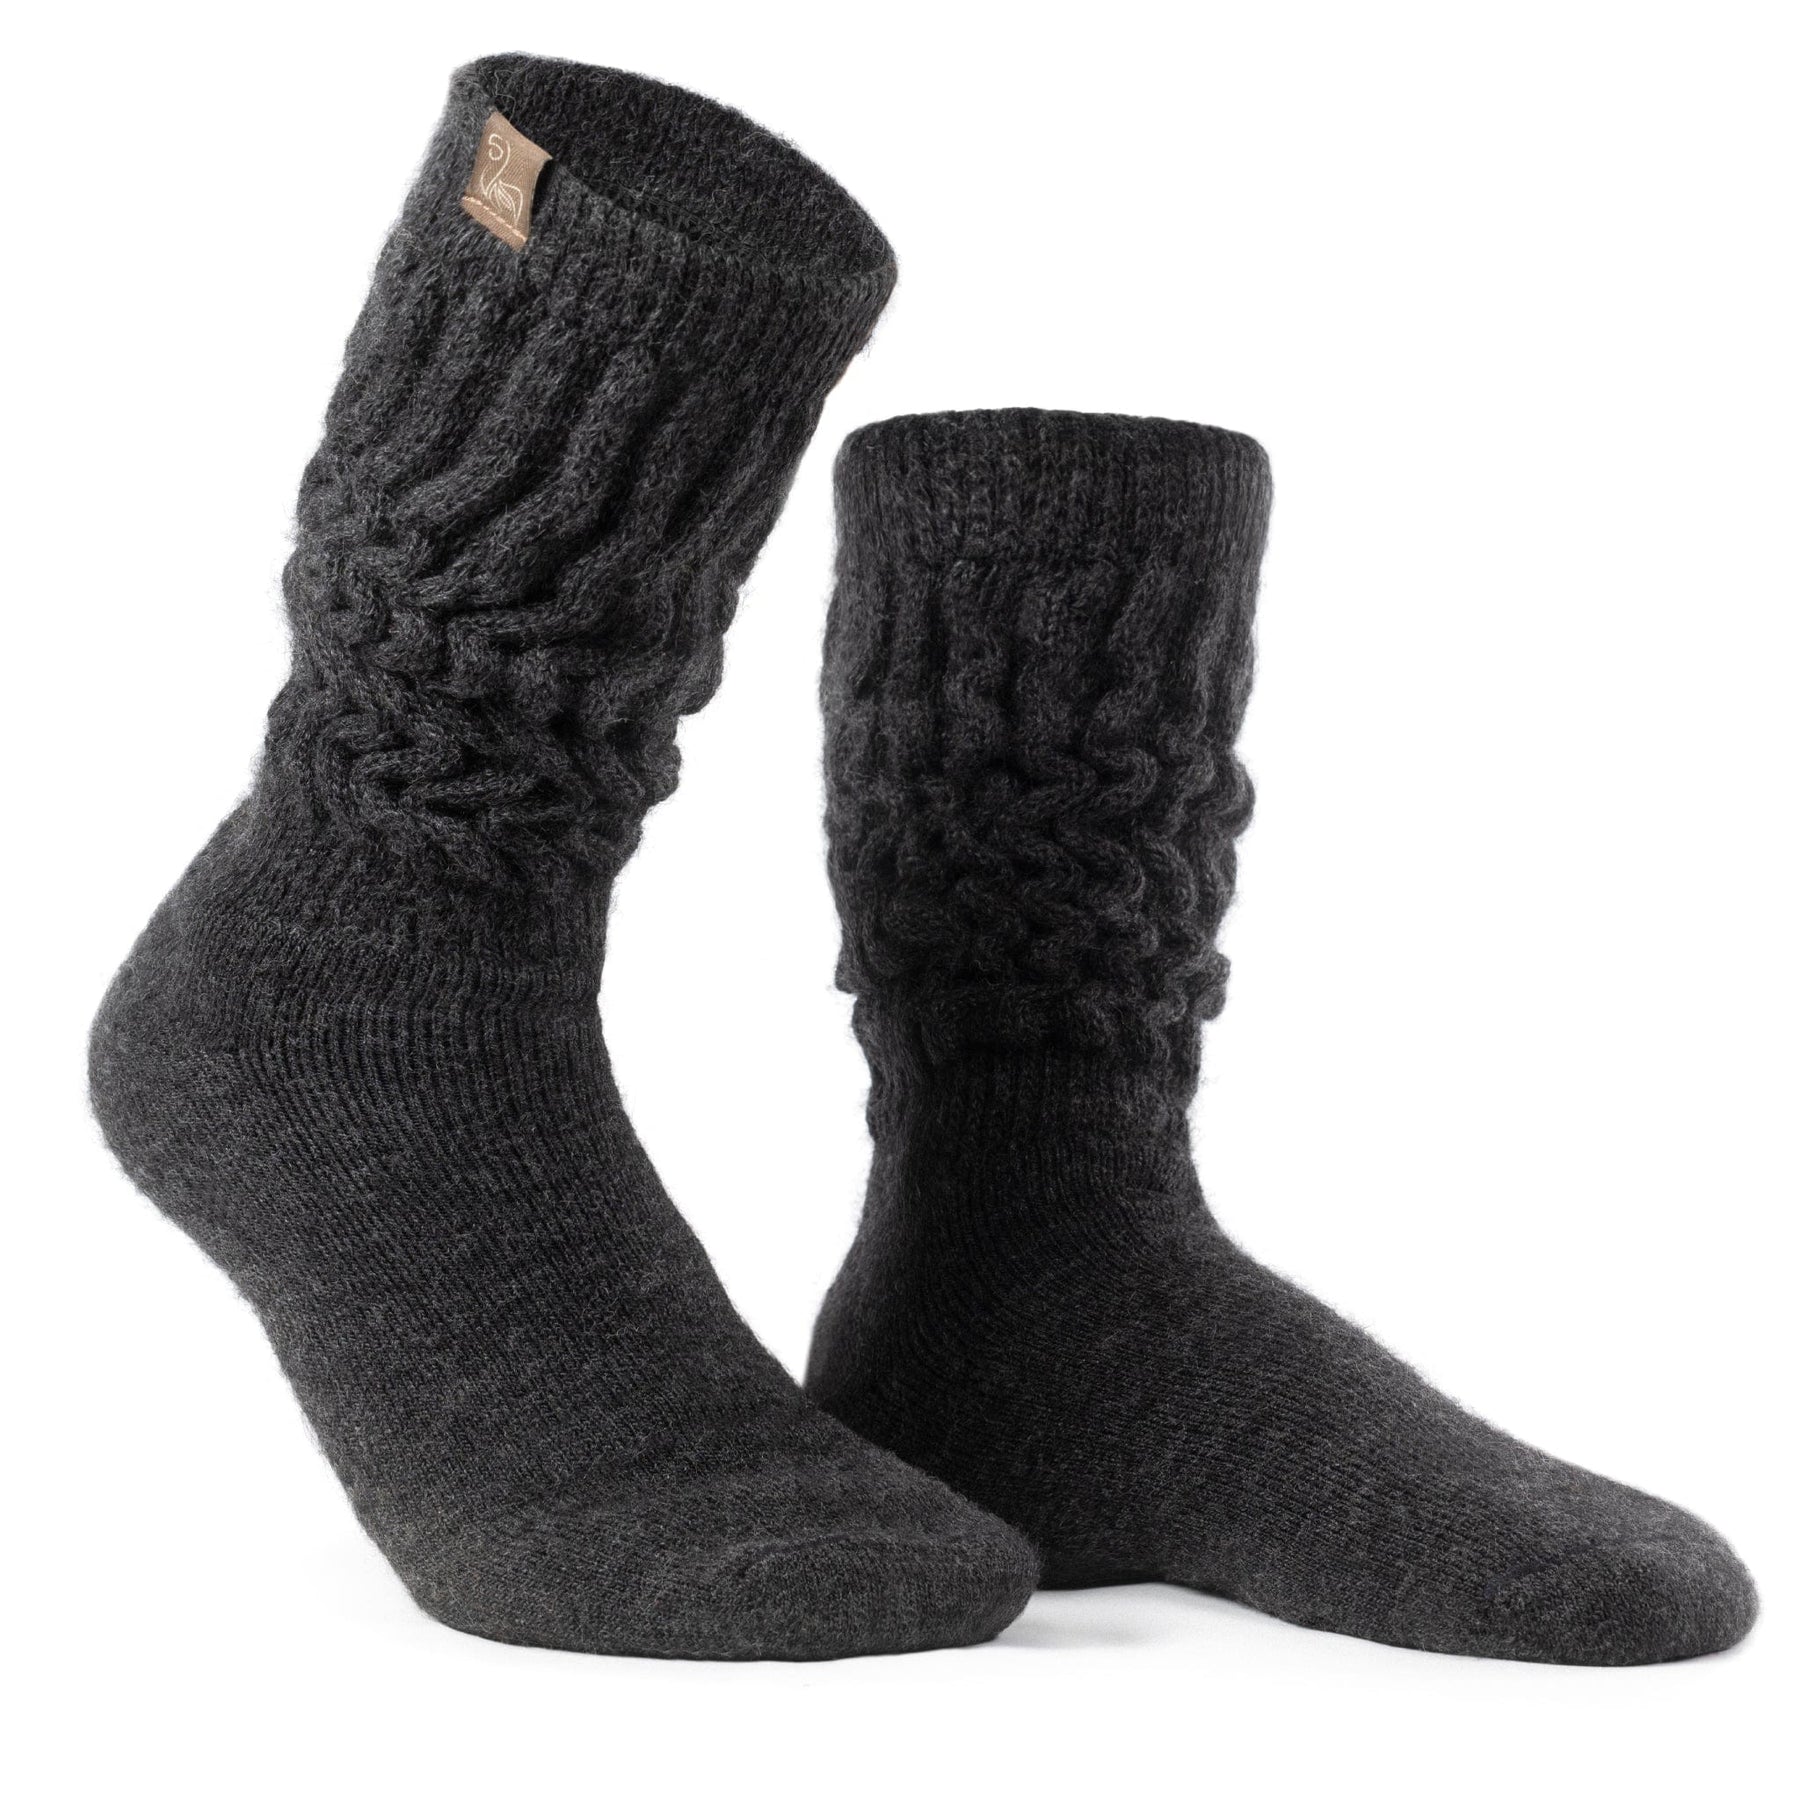 Therapeutic Comfort - Alpaca Socks